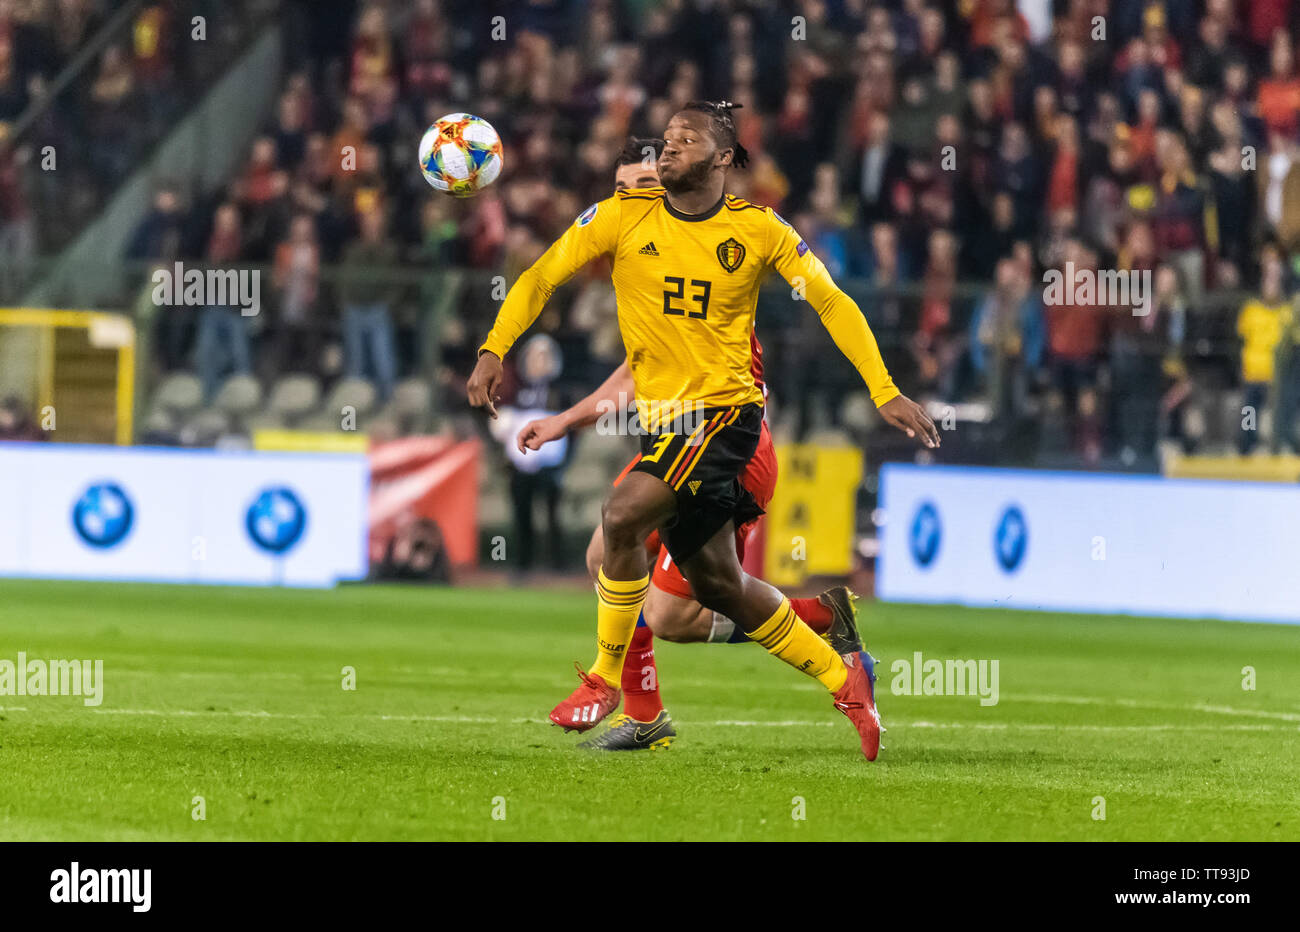 Brüssel, Belgien - 21. März 2019. Belgien National Football team Stürmer Michy Batshuayi gegen Russland defender Georgi Dzhikiya während der UEFA EURO 20. Stockfoto